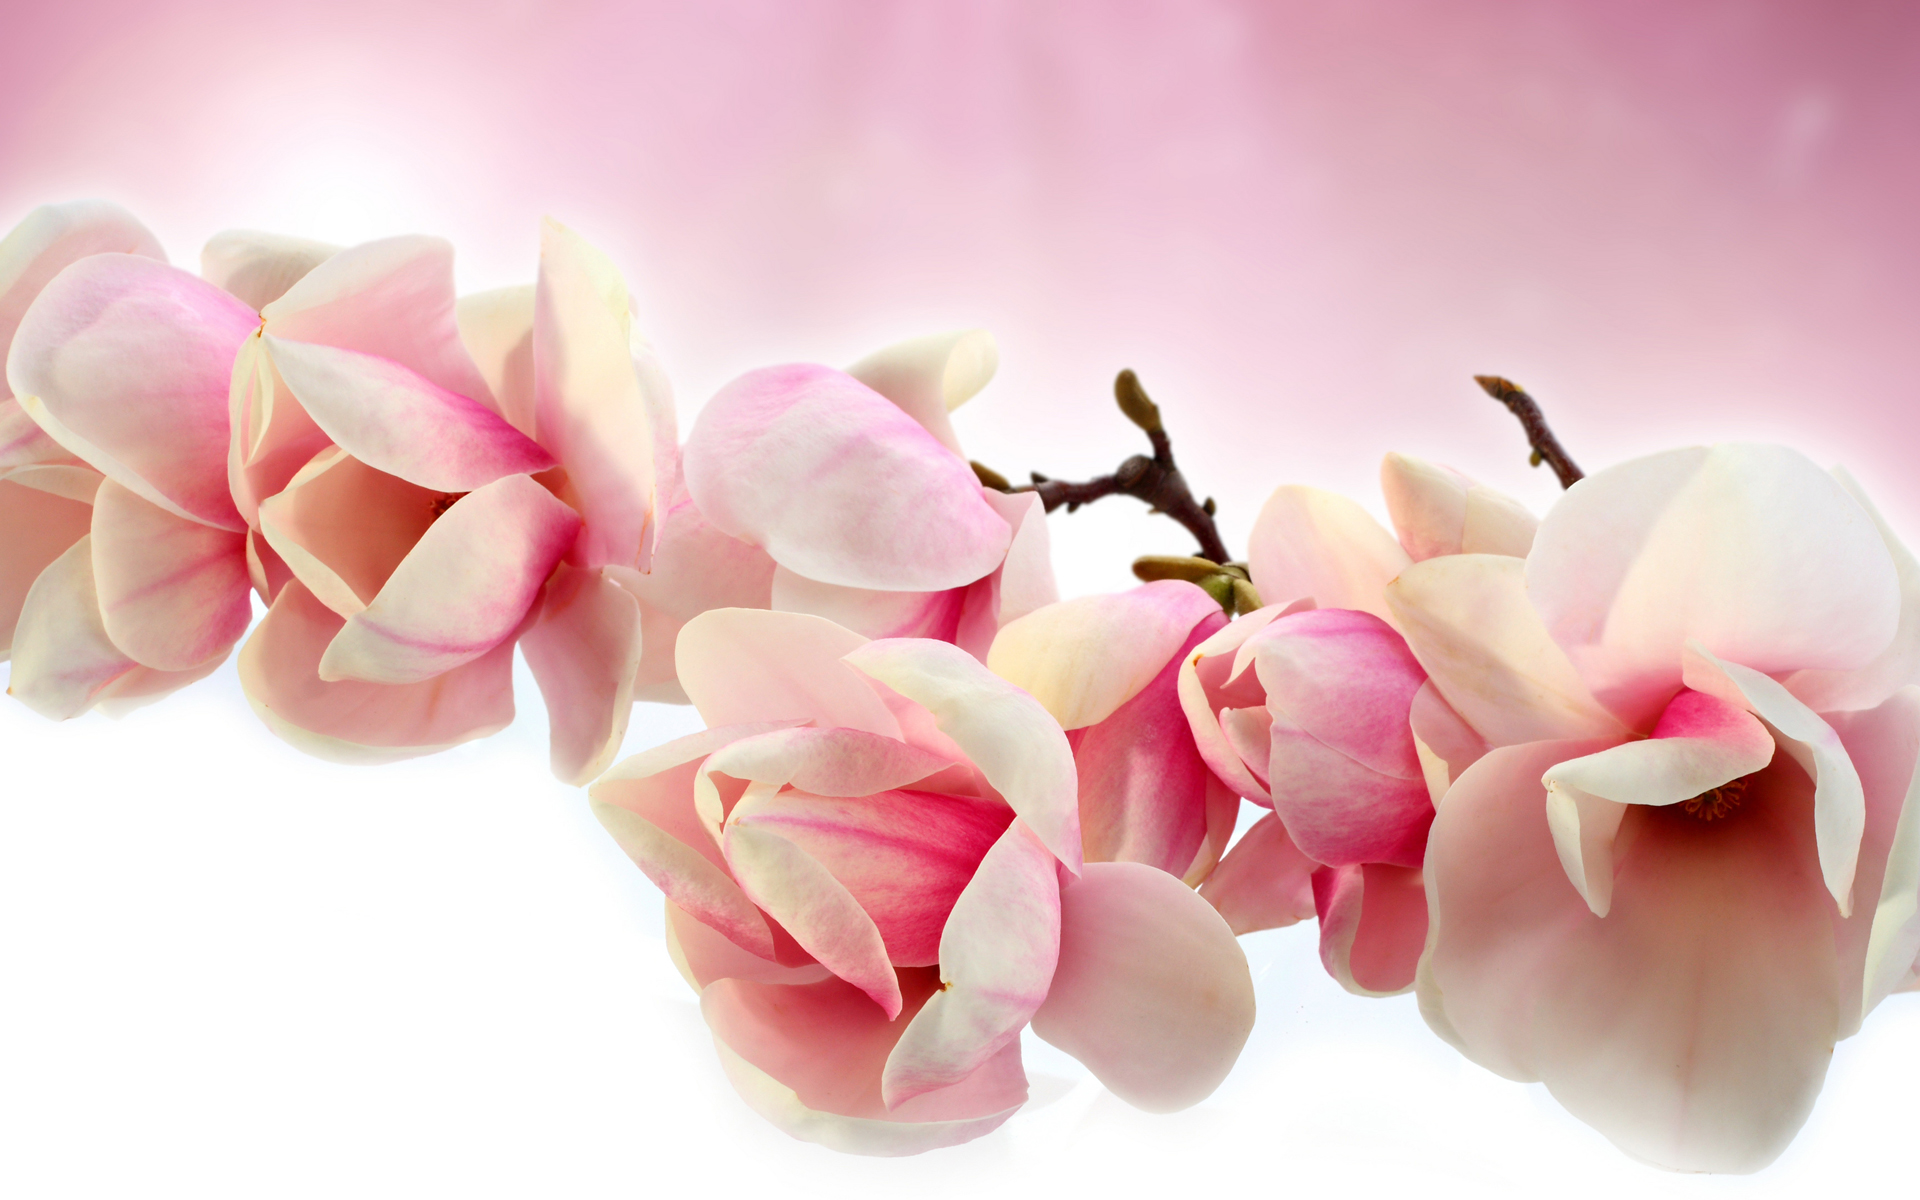 409289 descargar imagen tierra/naturaleza, magnolia, florecer, rama, flor rosa, árboles: fondos de pantalla y protectores de pantalla gratis